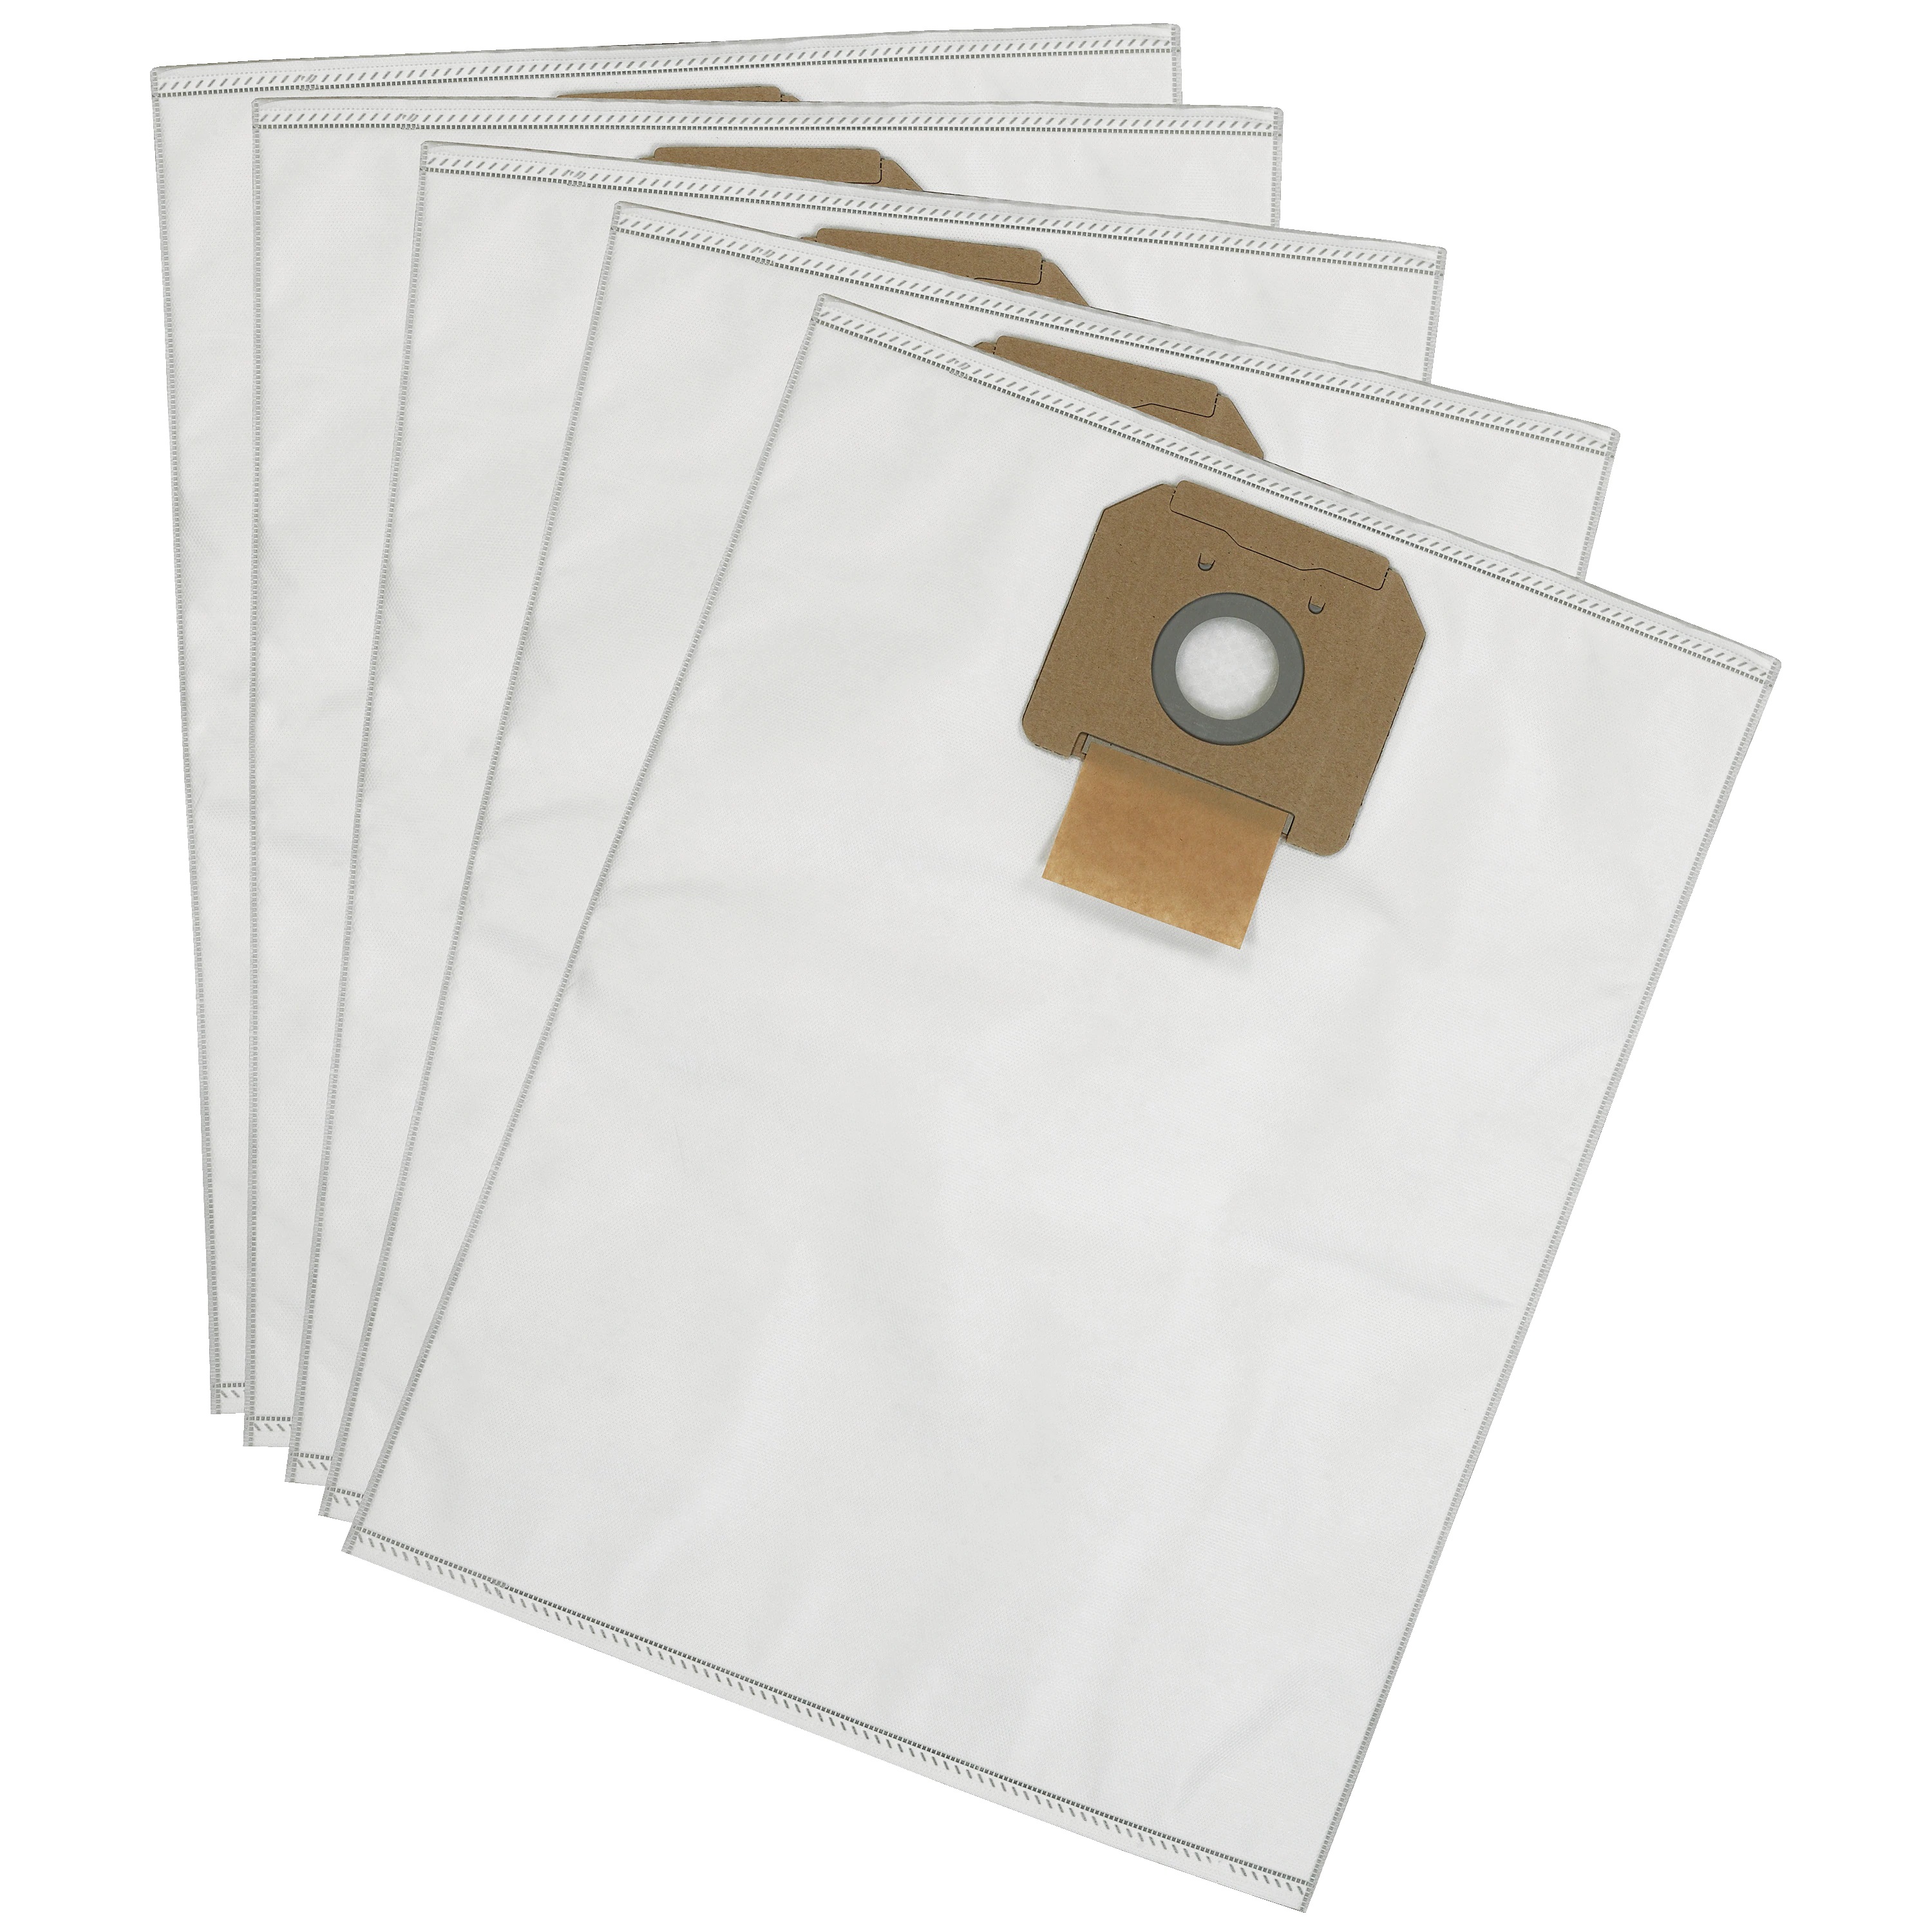 Fleece Bag (5 Pack) for DeWalt Dust Extractors - Dustless Attachments